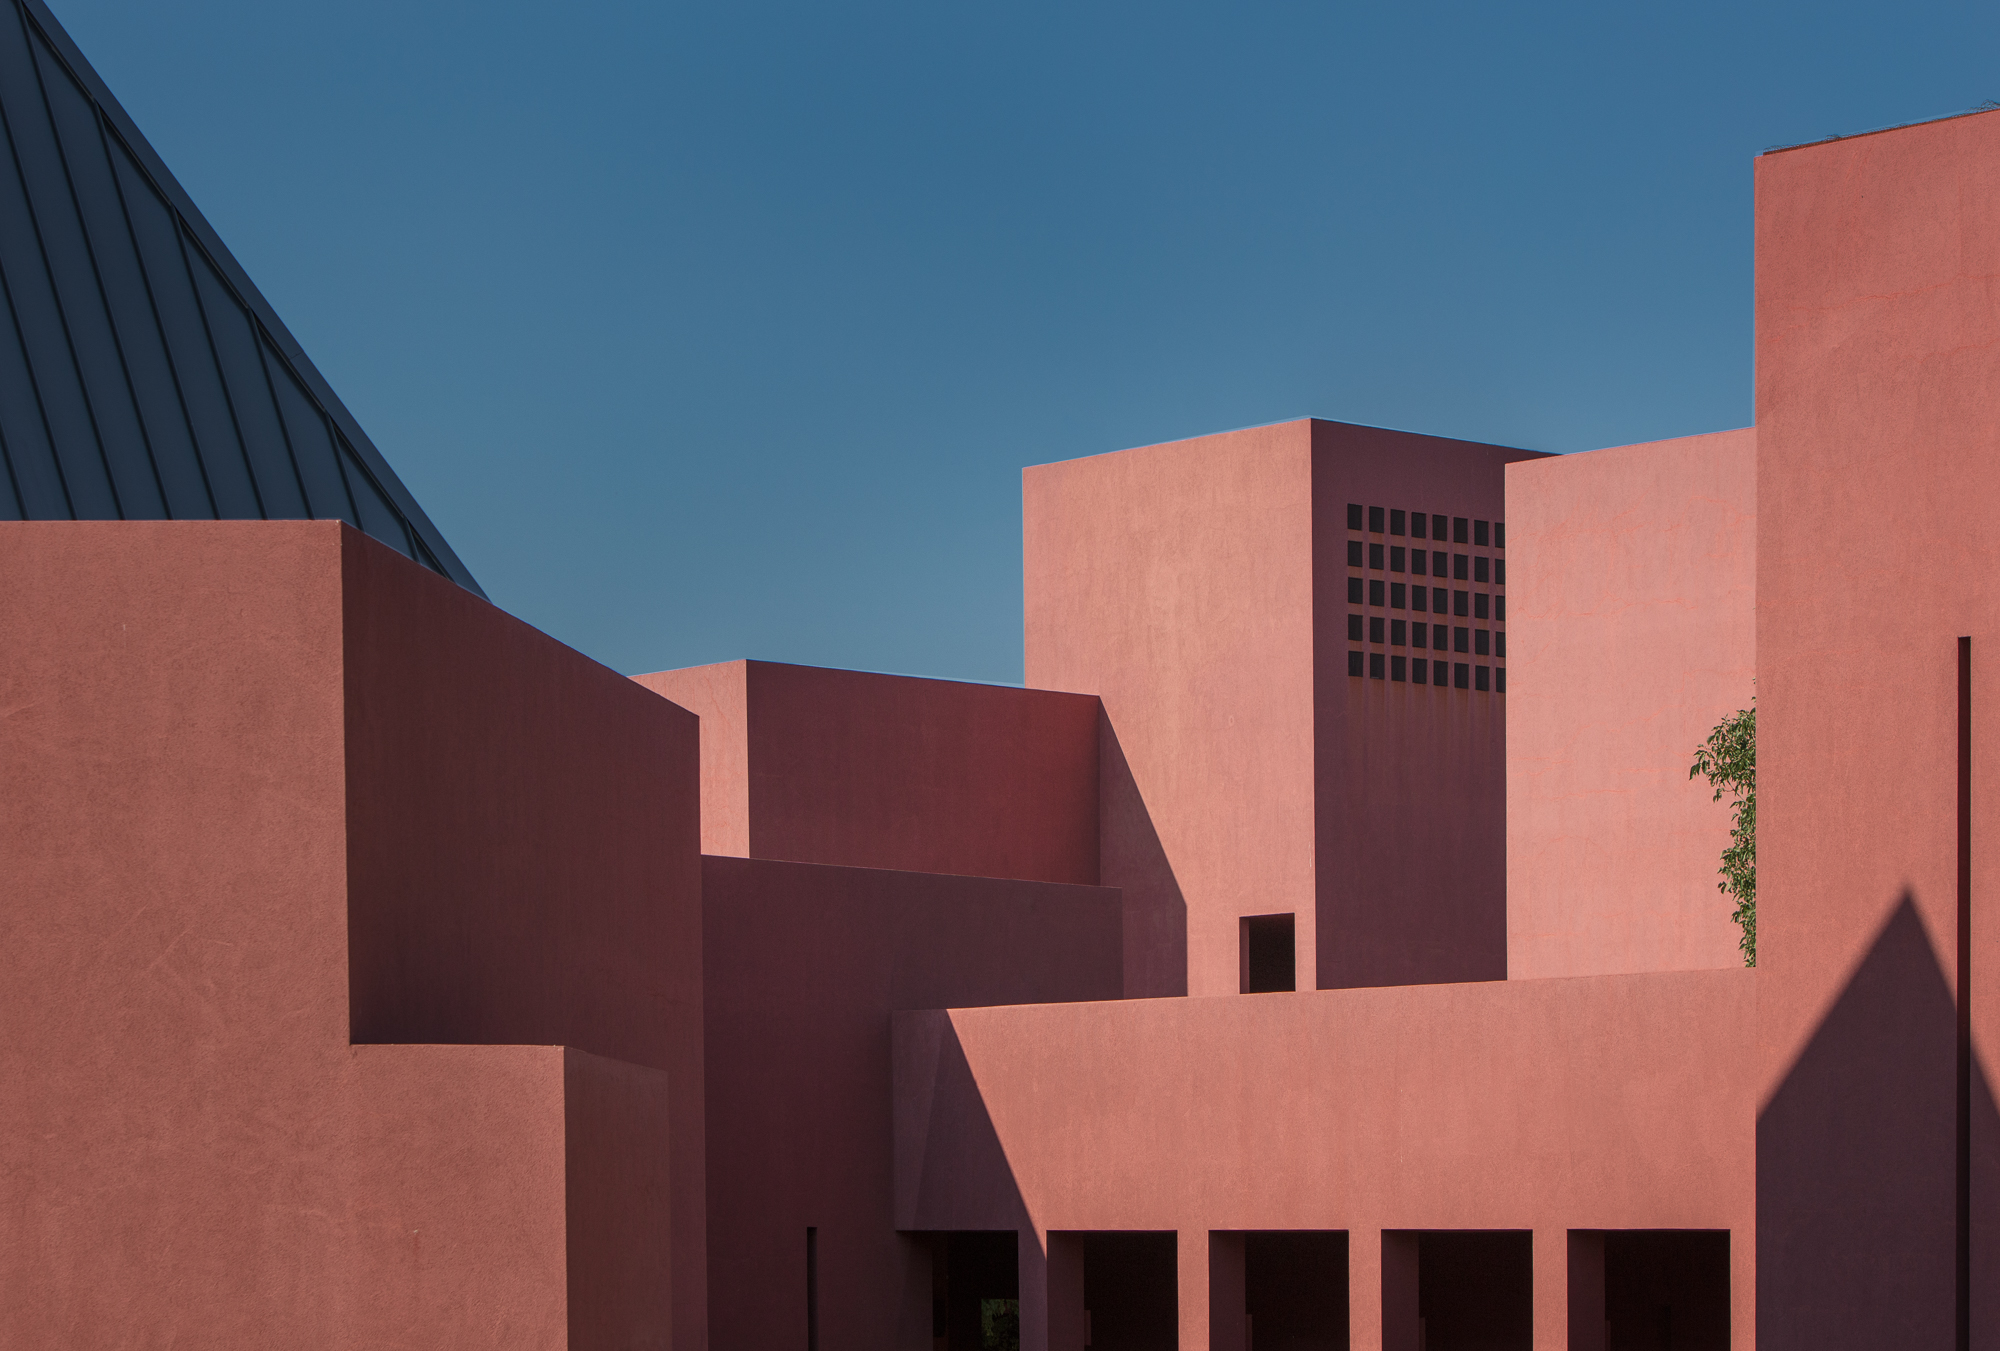  LEGORRETA - Visual Arts Center, Santa Fe 